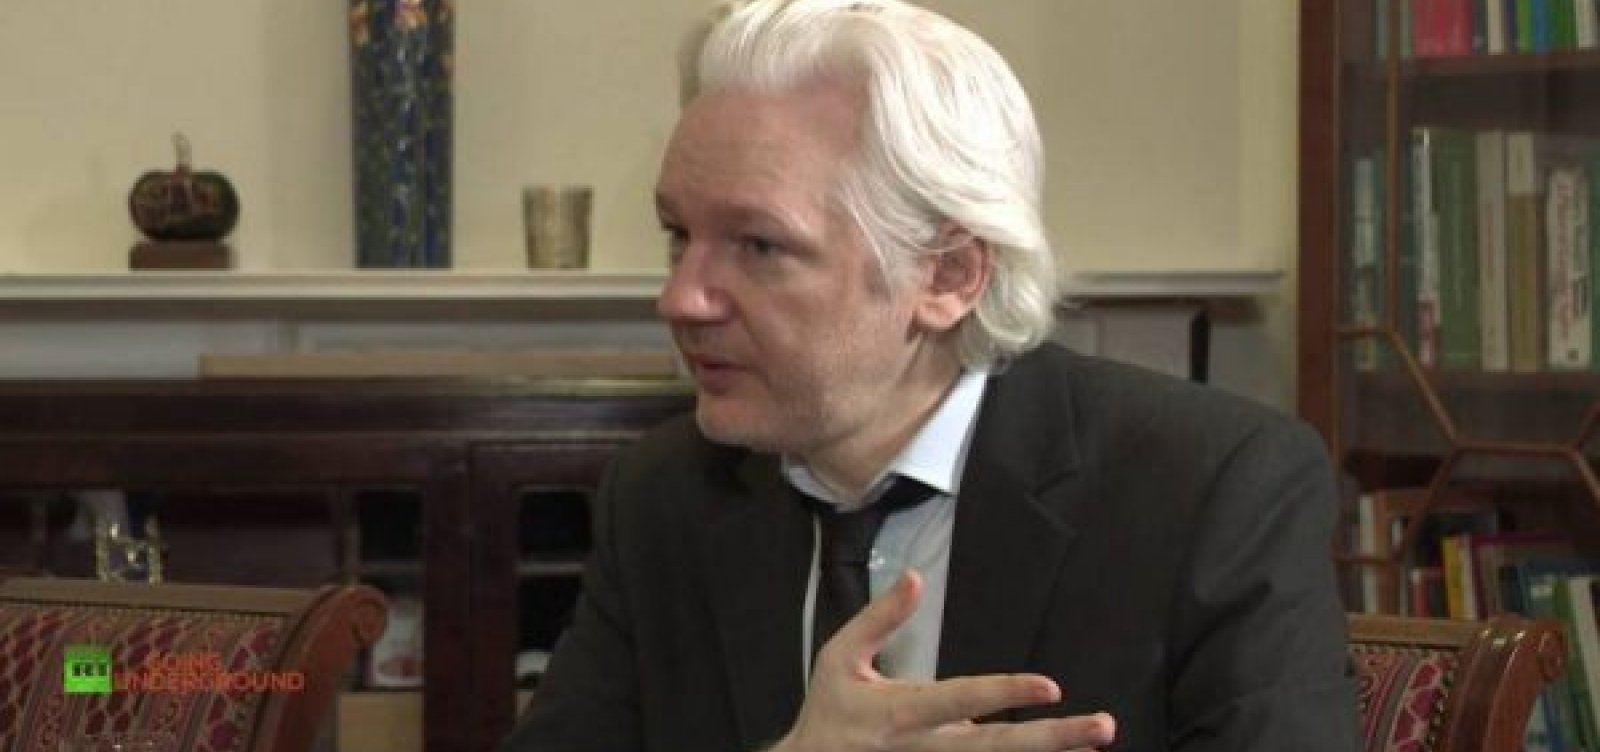 Suécia suspende investigações de estupro contra Julian Assange